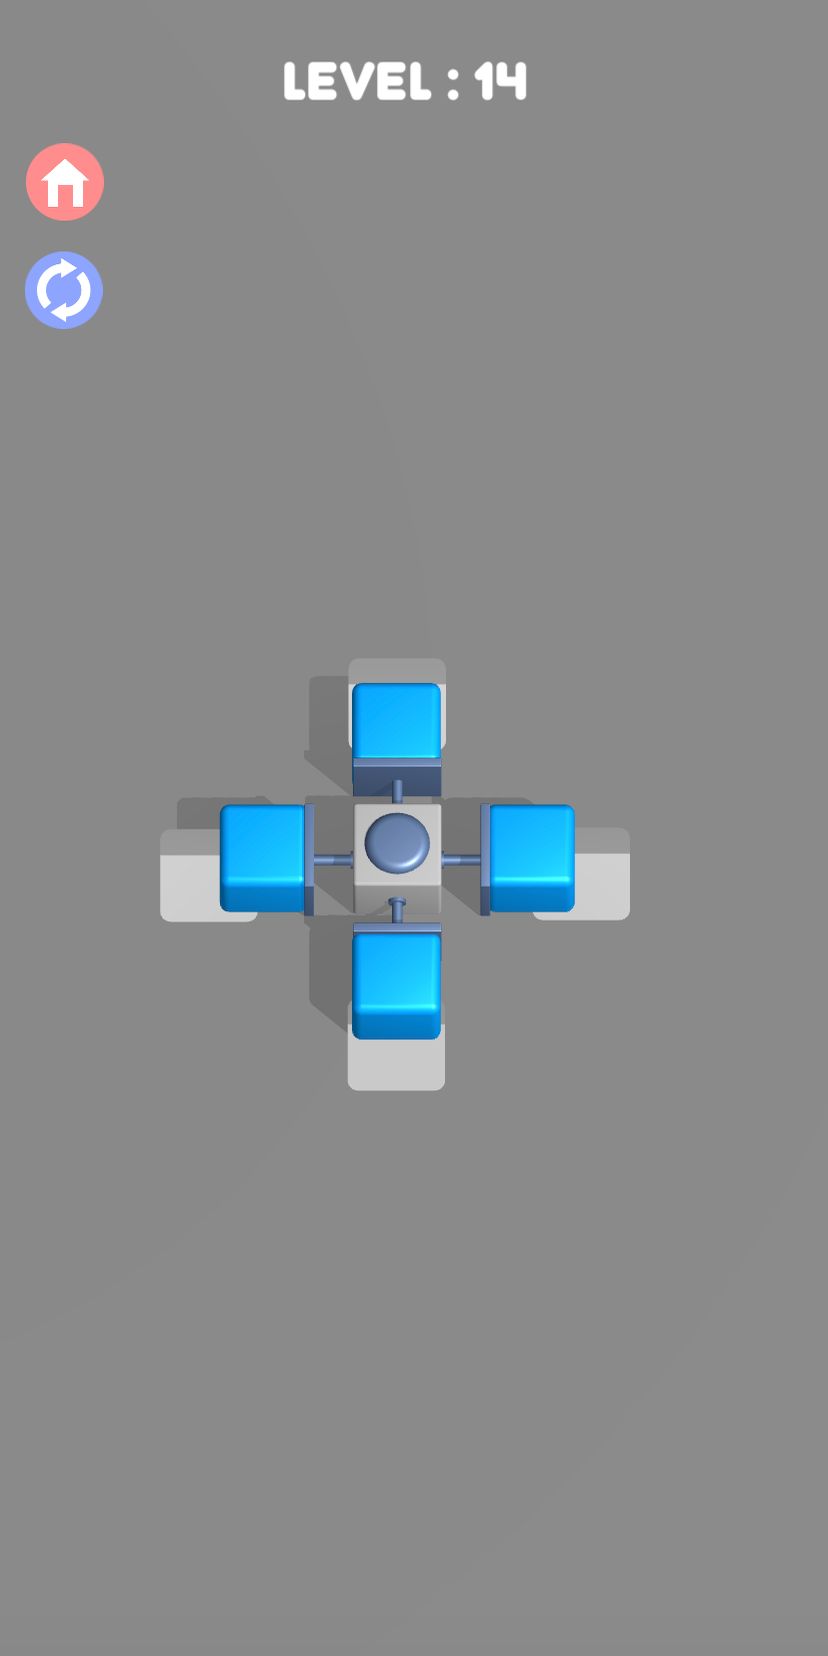 Push them all 3D - Smart block puzzle game screenshot 1